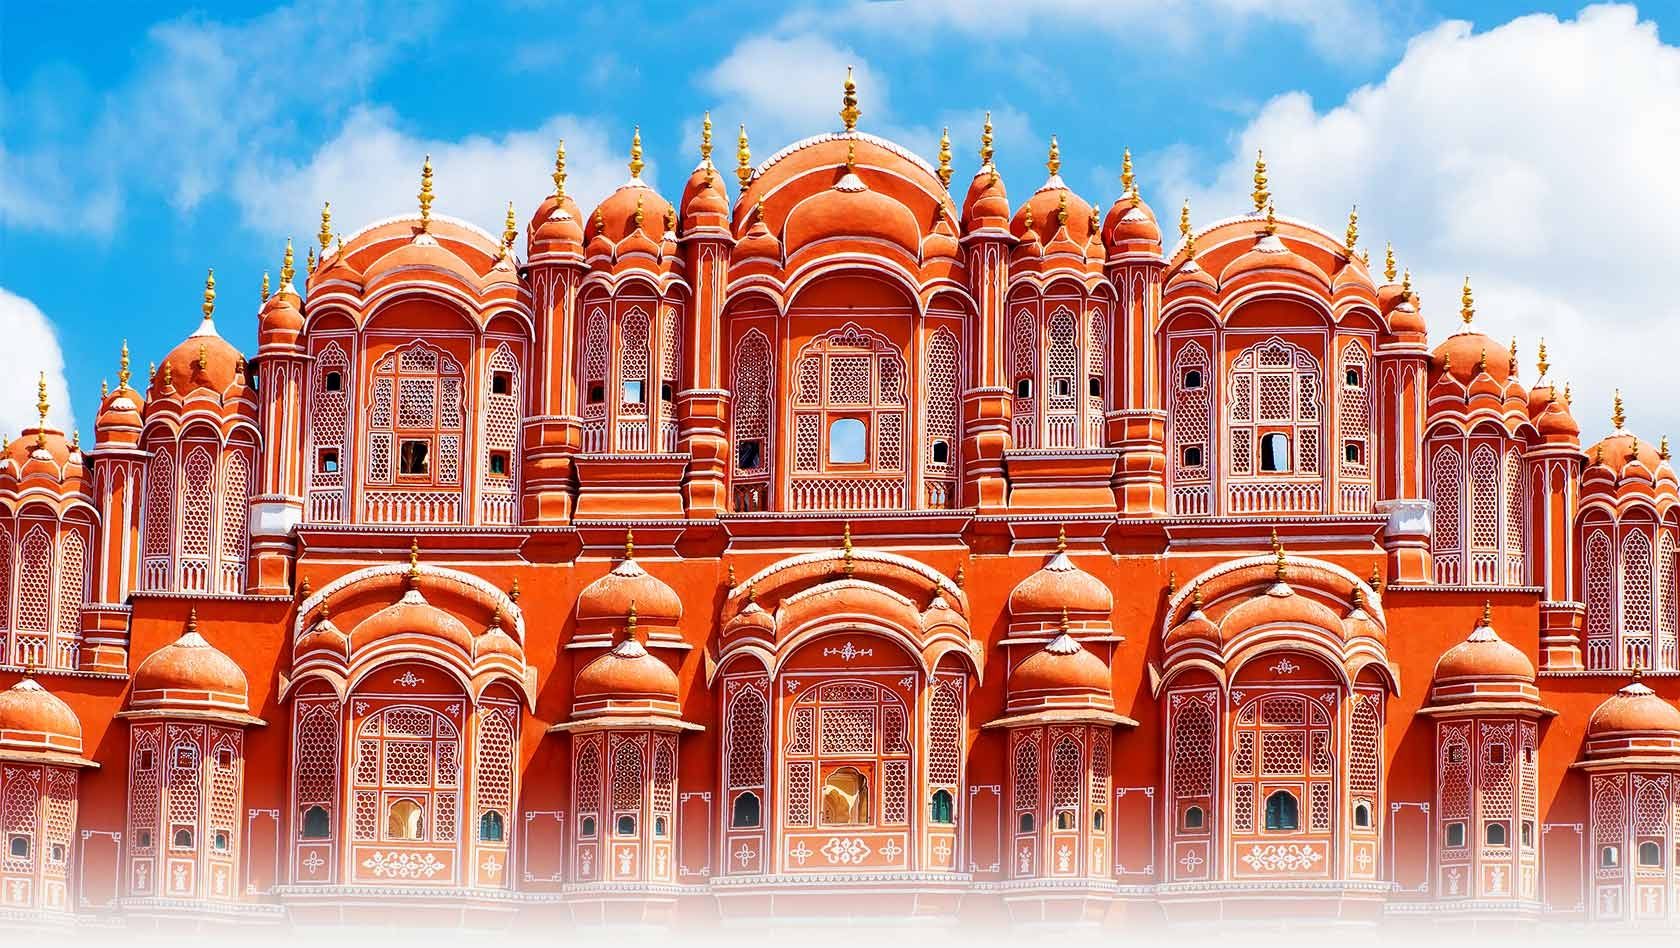 Hawa Mahal Palace in Jaipur - Travel foto (39643277) - Fanpop